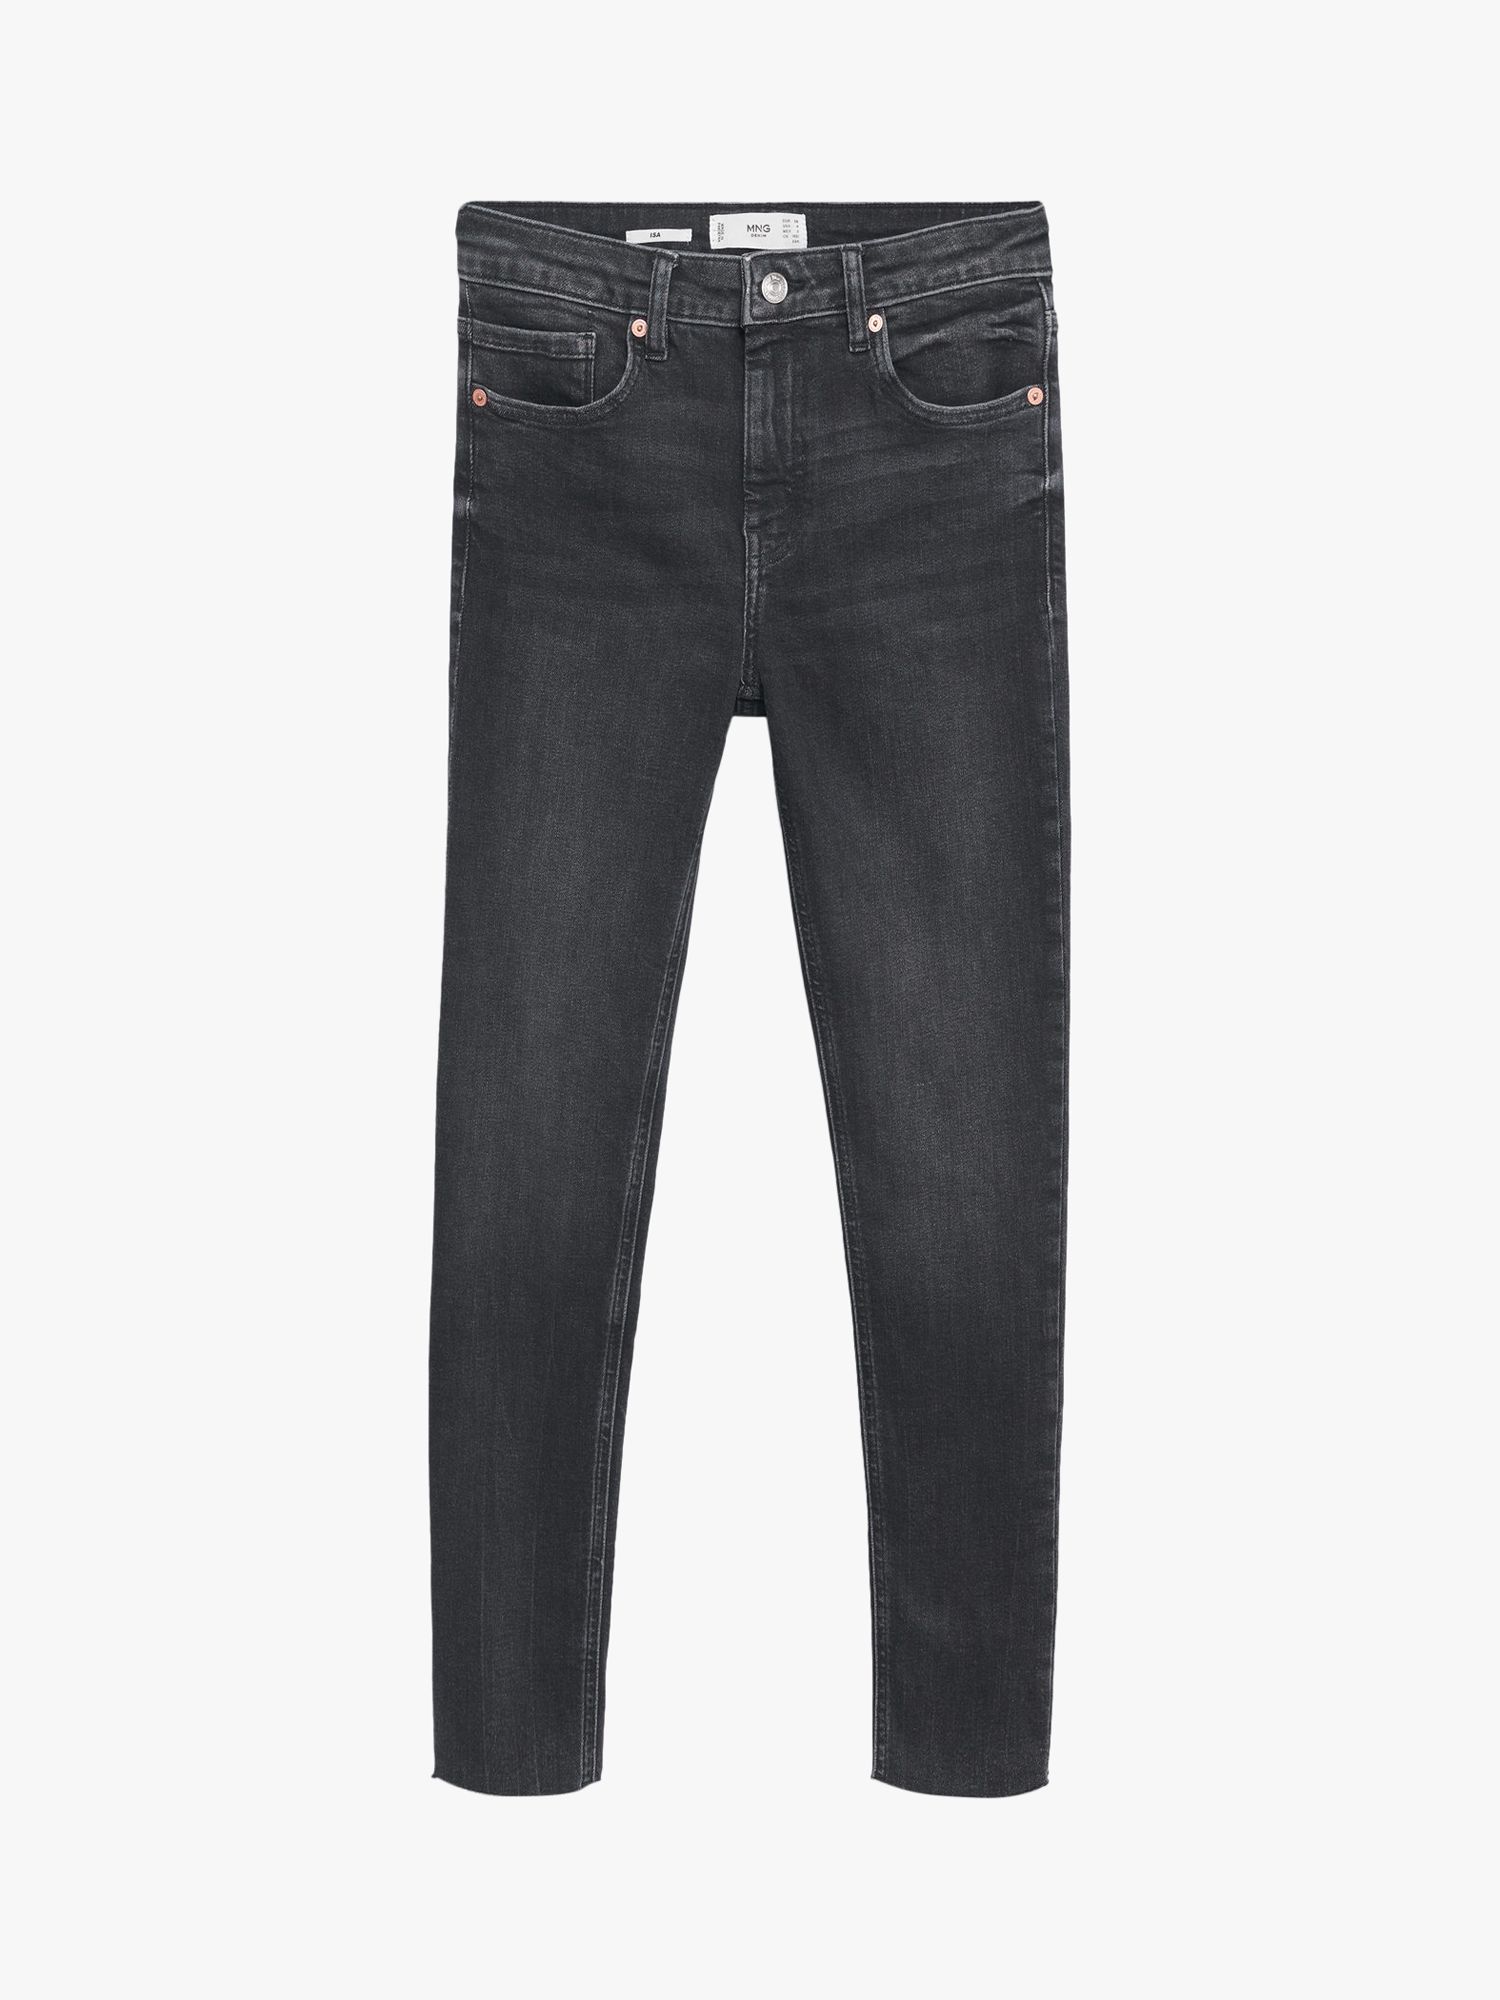 Mango Isa Crop Skinny Jeans, Open Grey at John Lewis & Partners